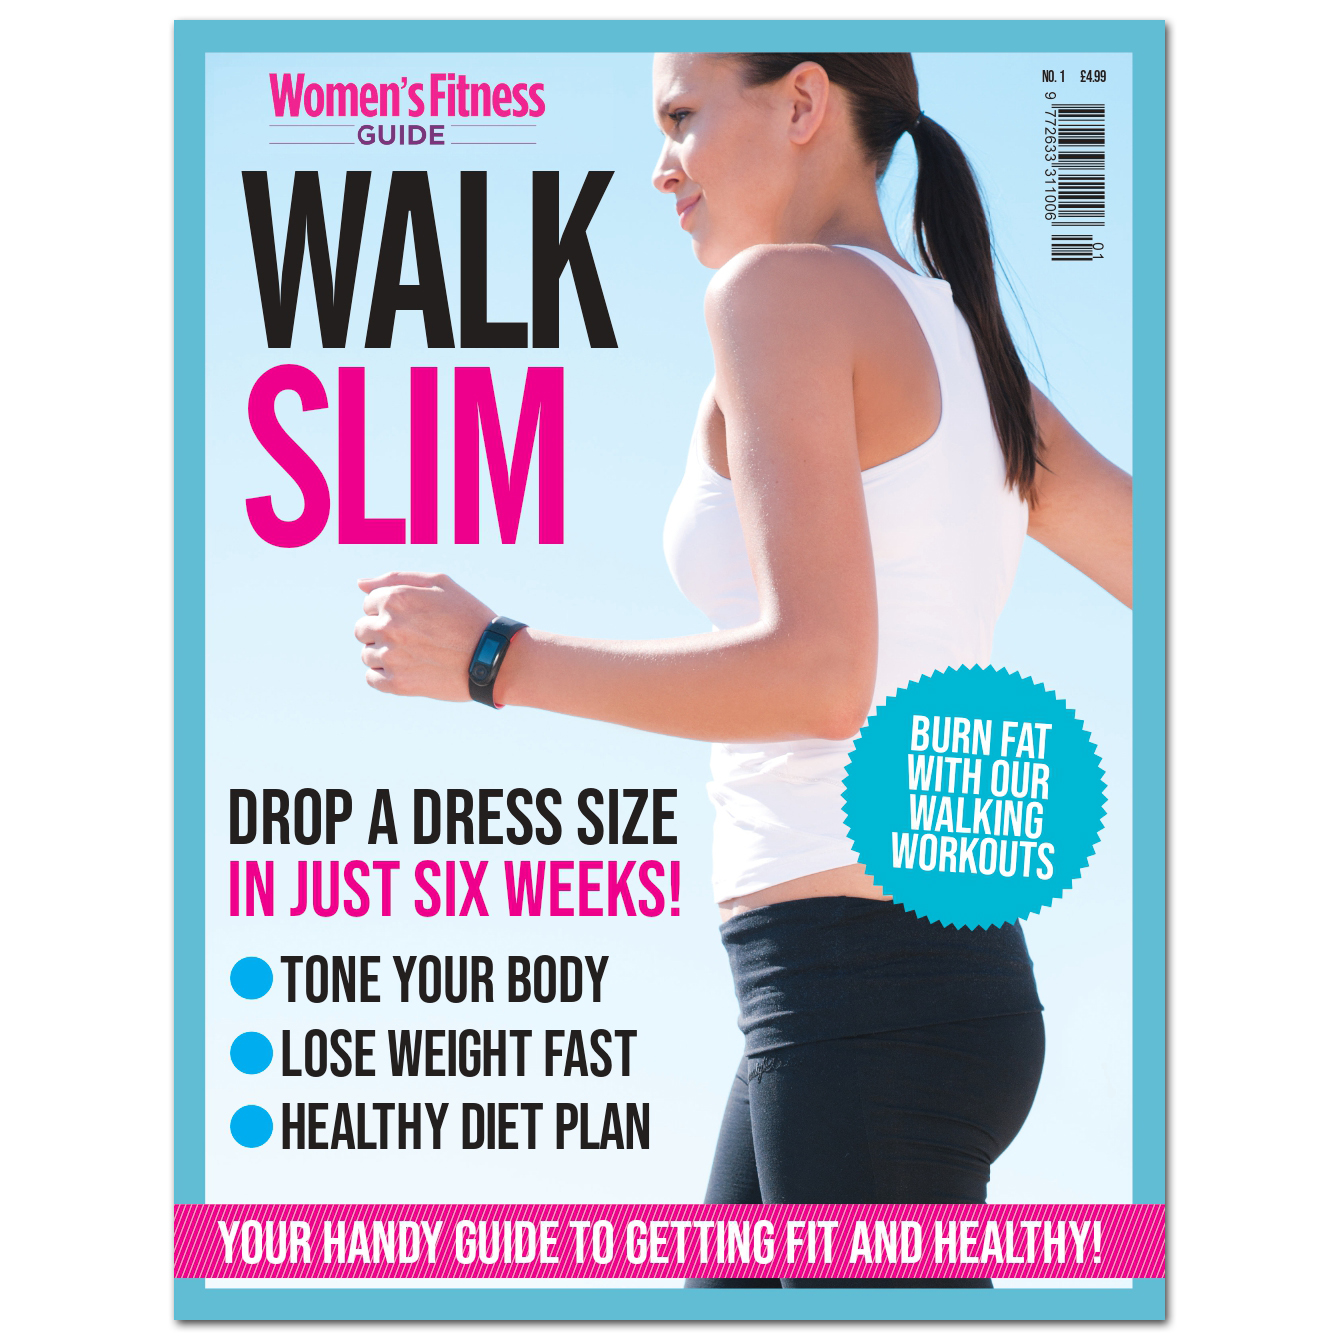 Women's Fitness Guide #1 - Walk Slim